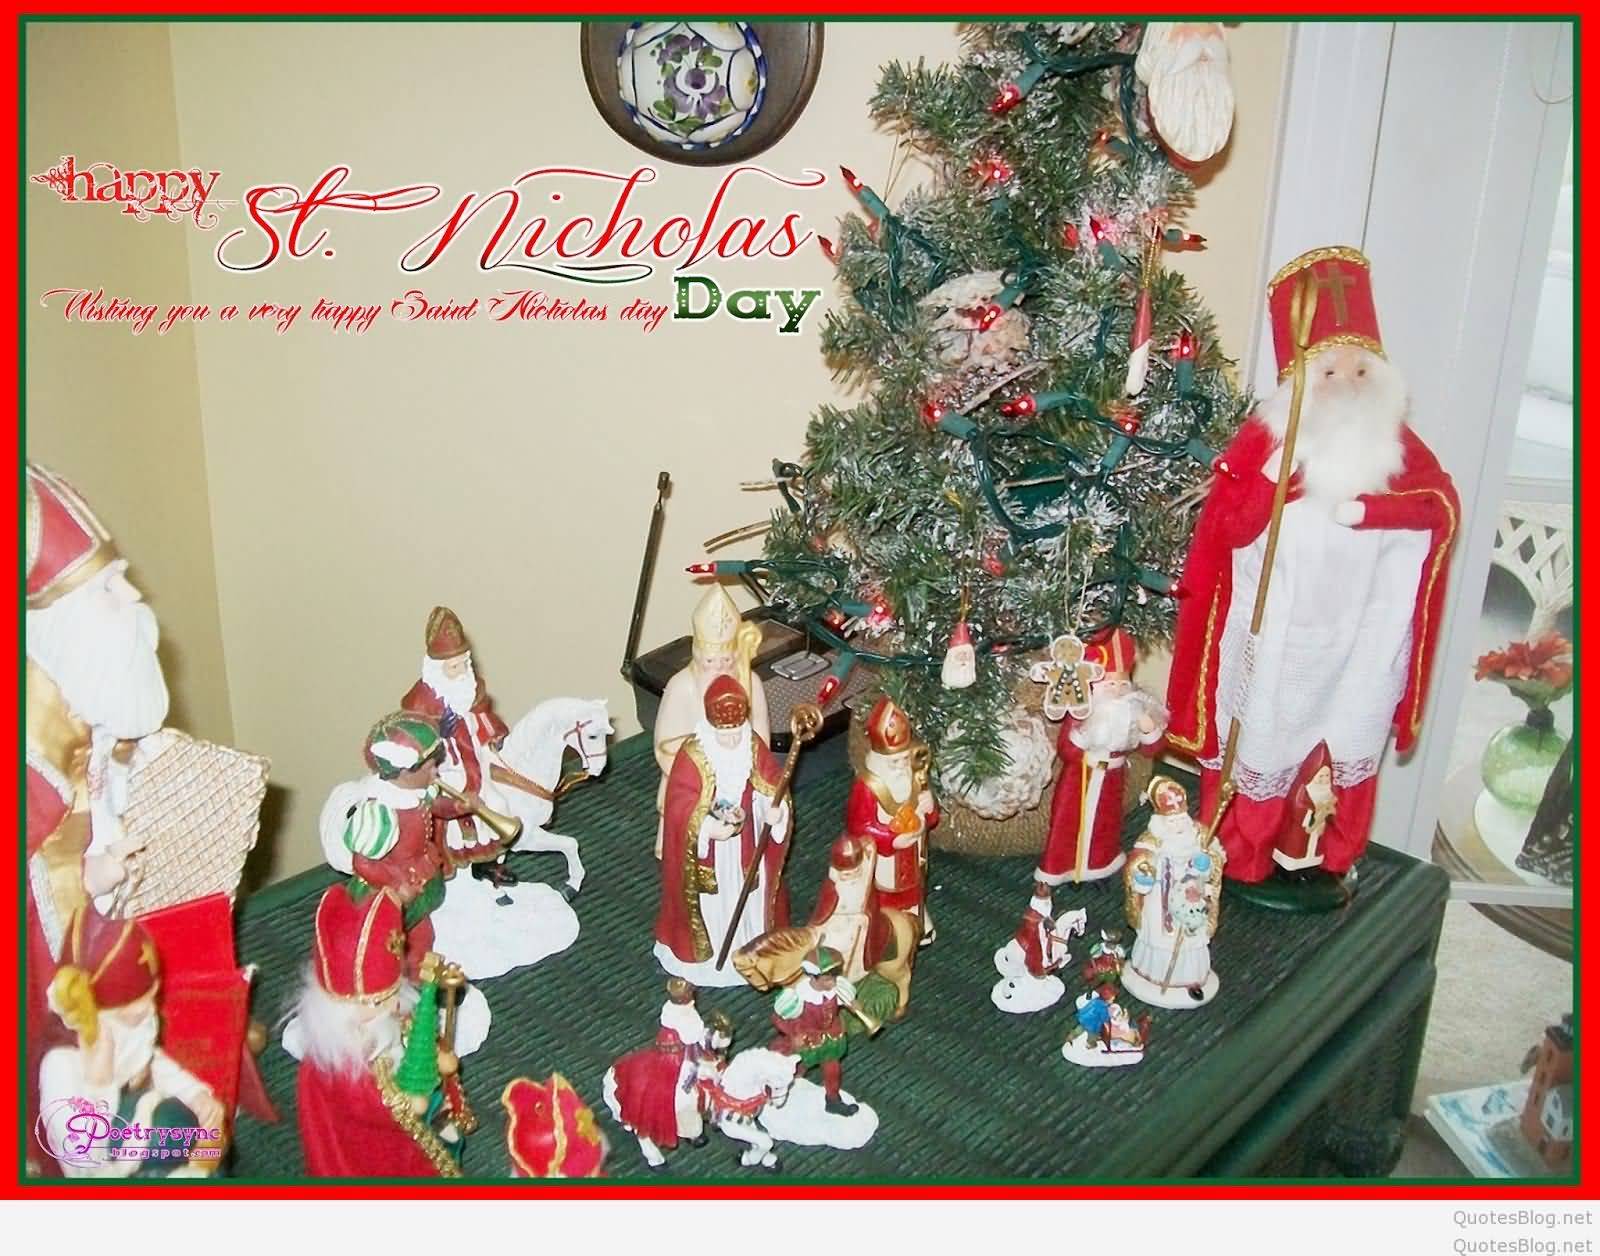 Wishing You A Very Happy Saint Nicholas Day